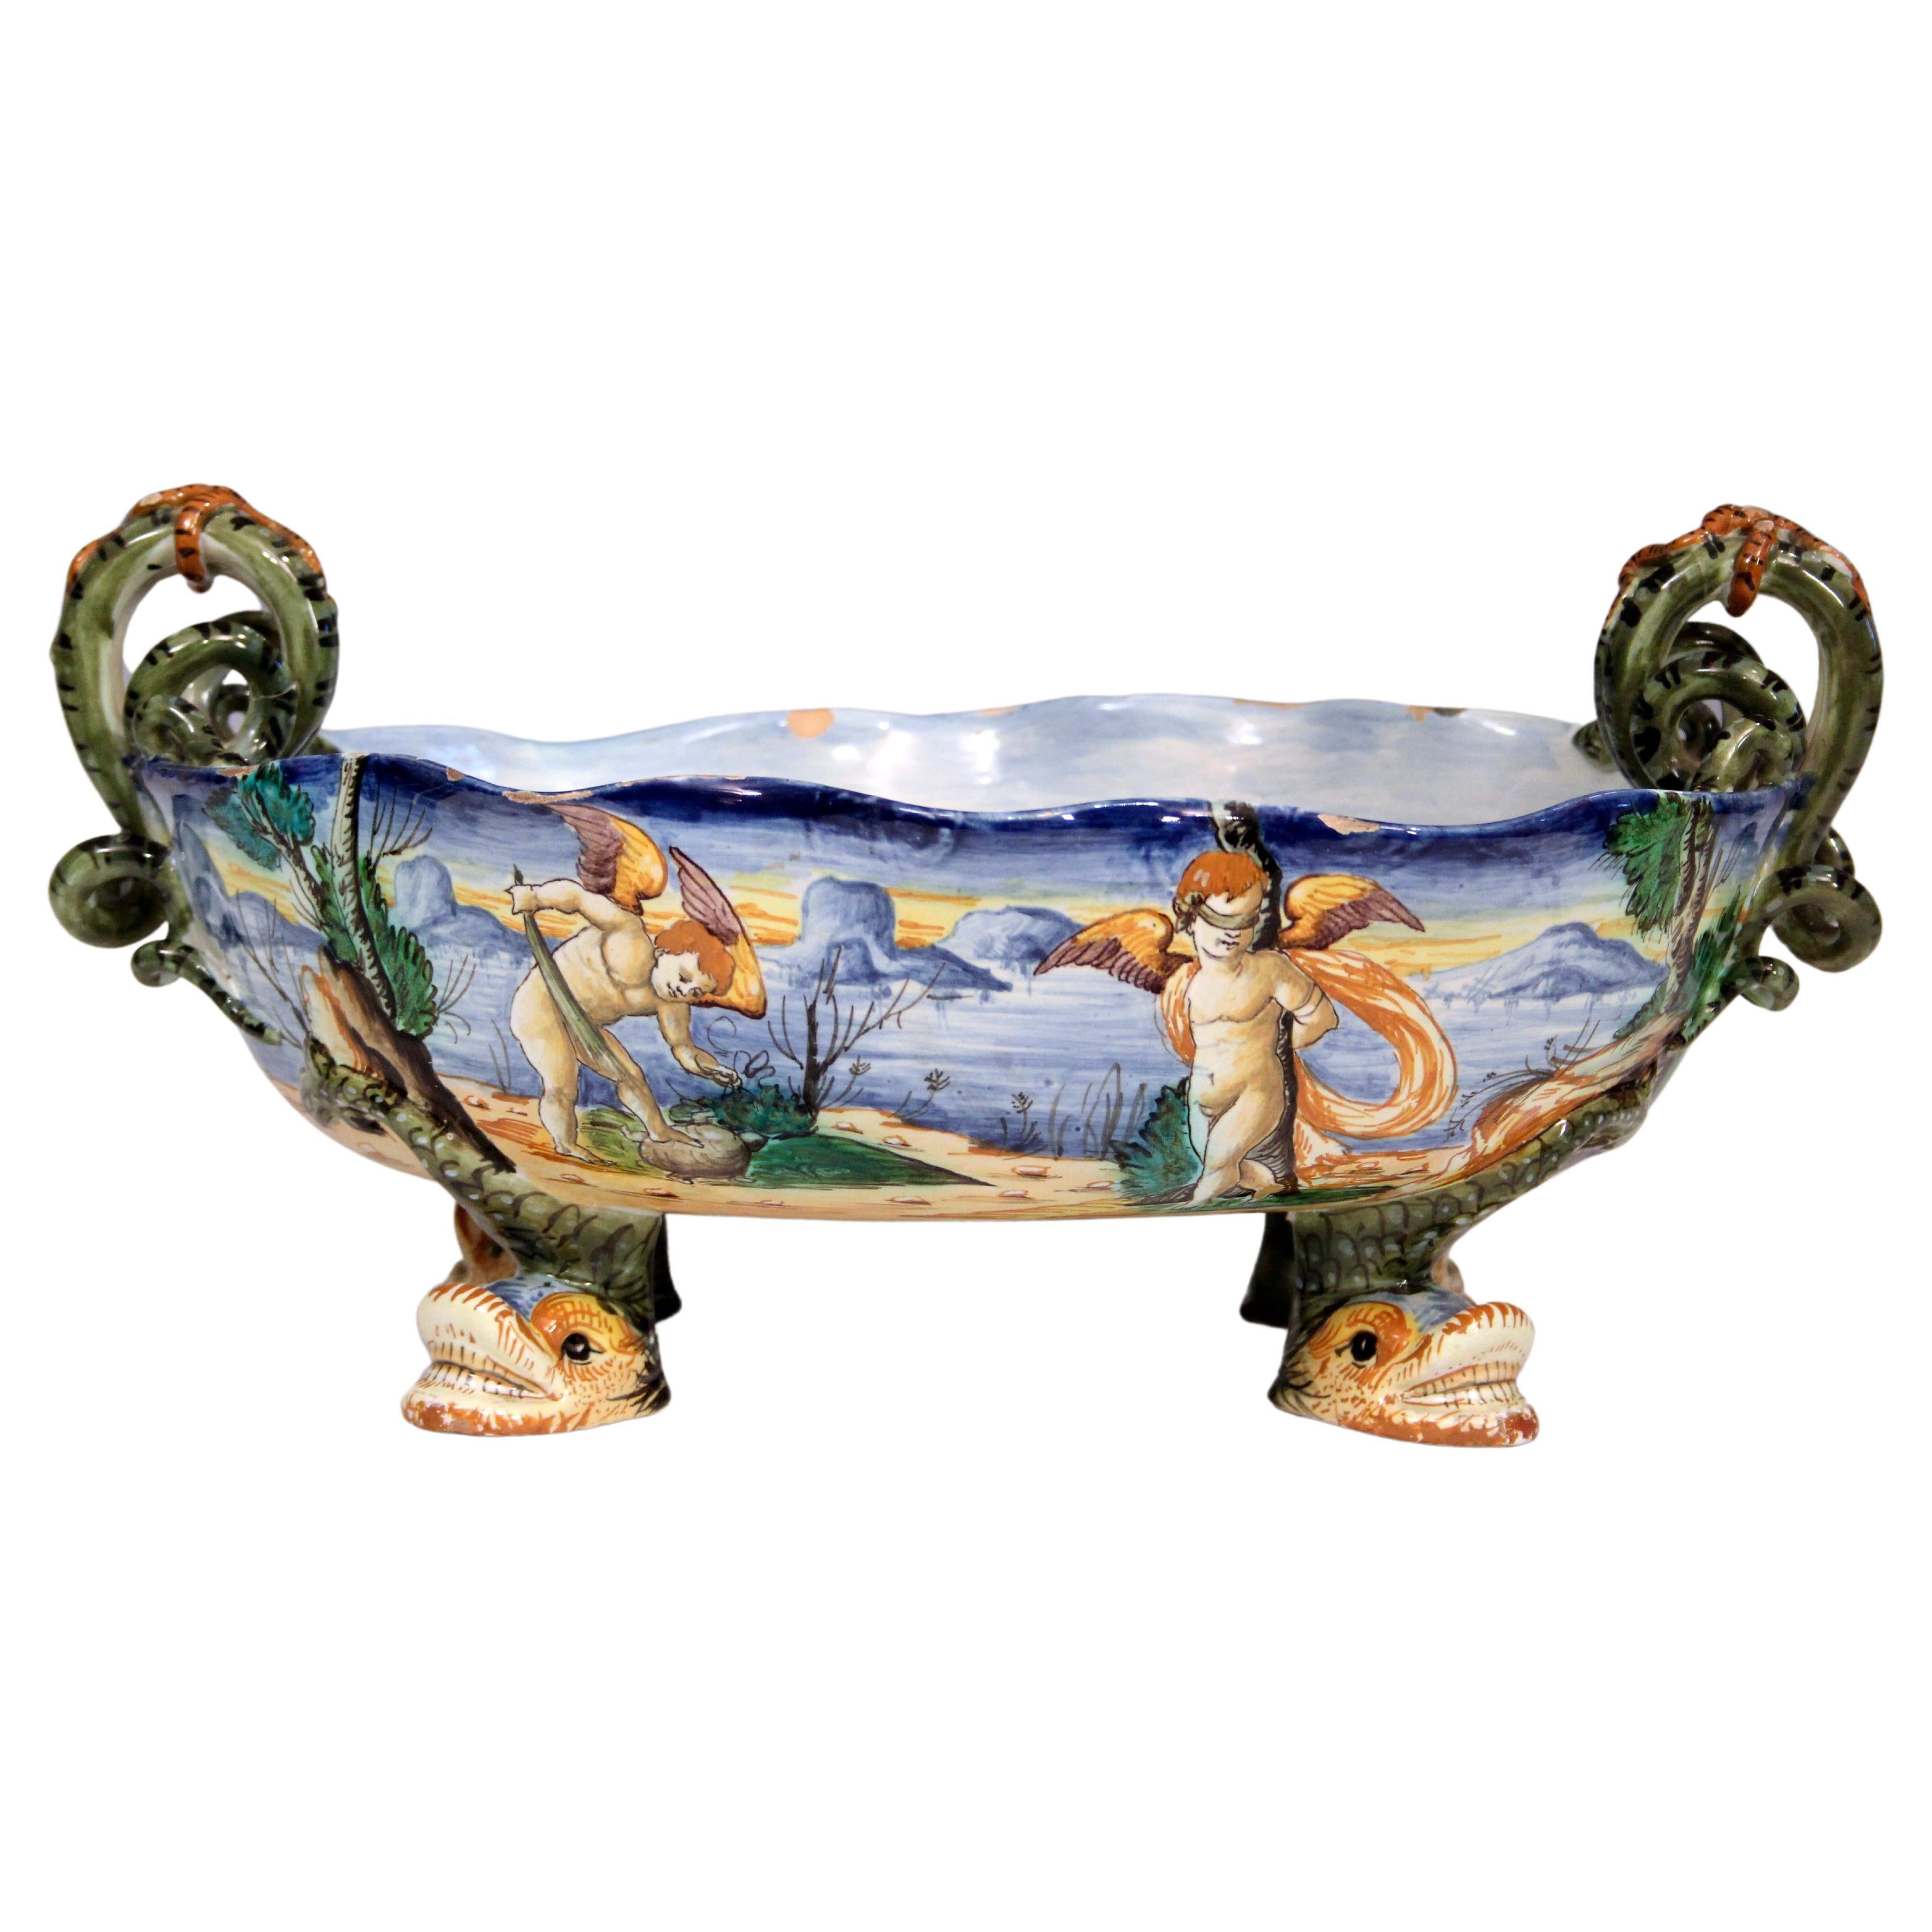 Cantagalli Antique Pottery Centerpiece Bowl Italian Majolica 16"